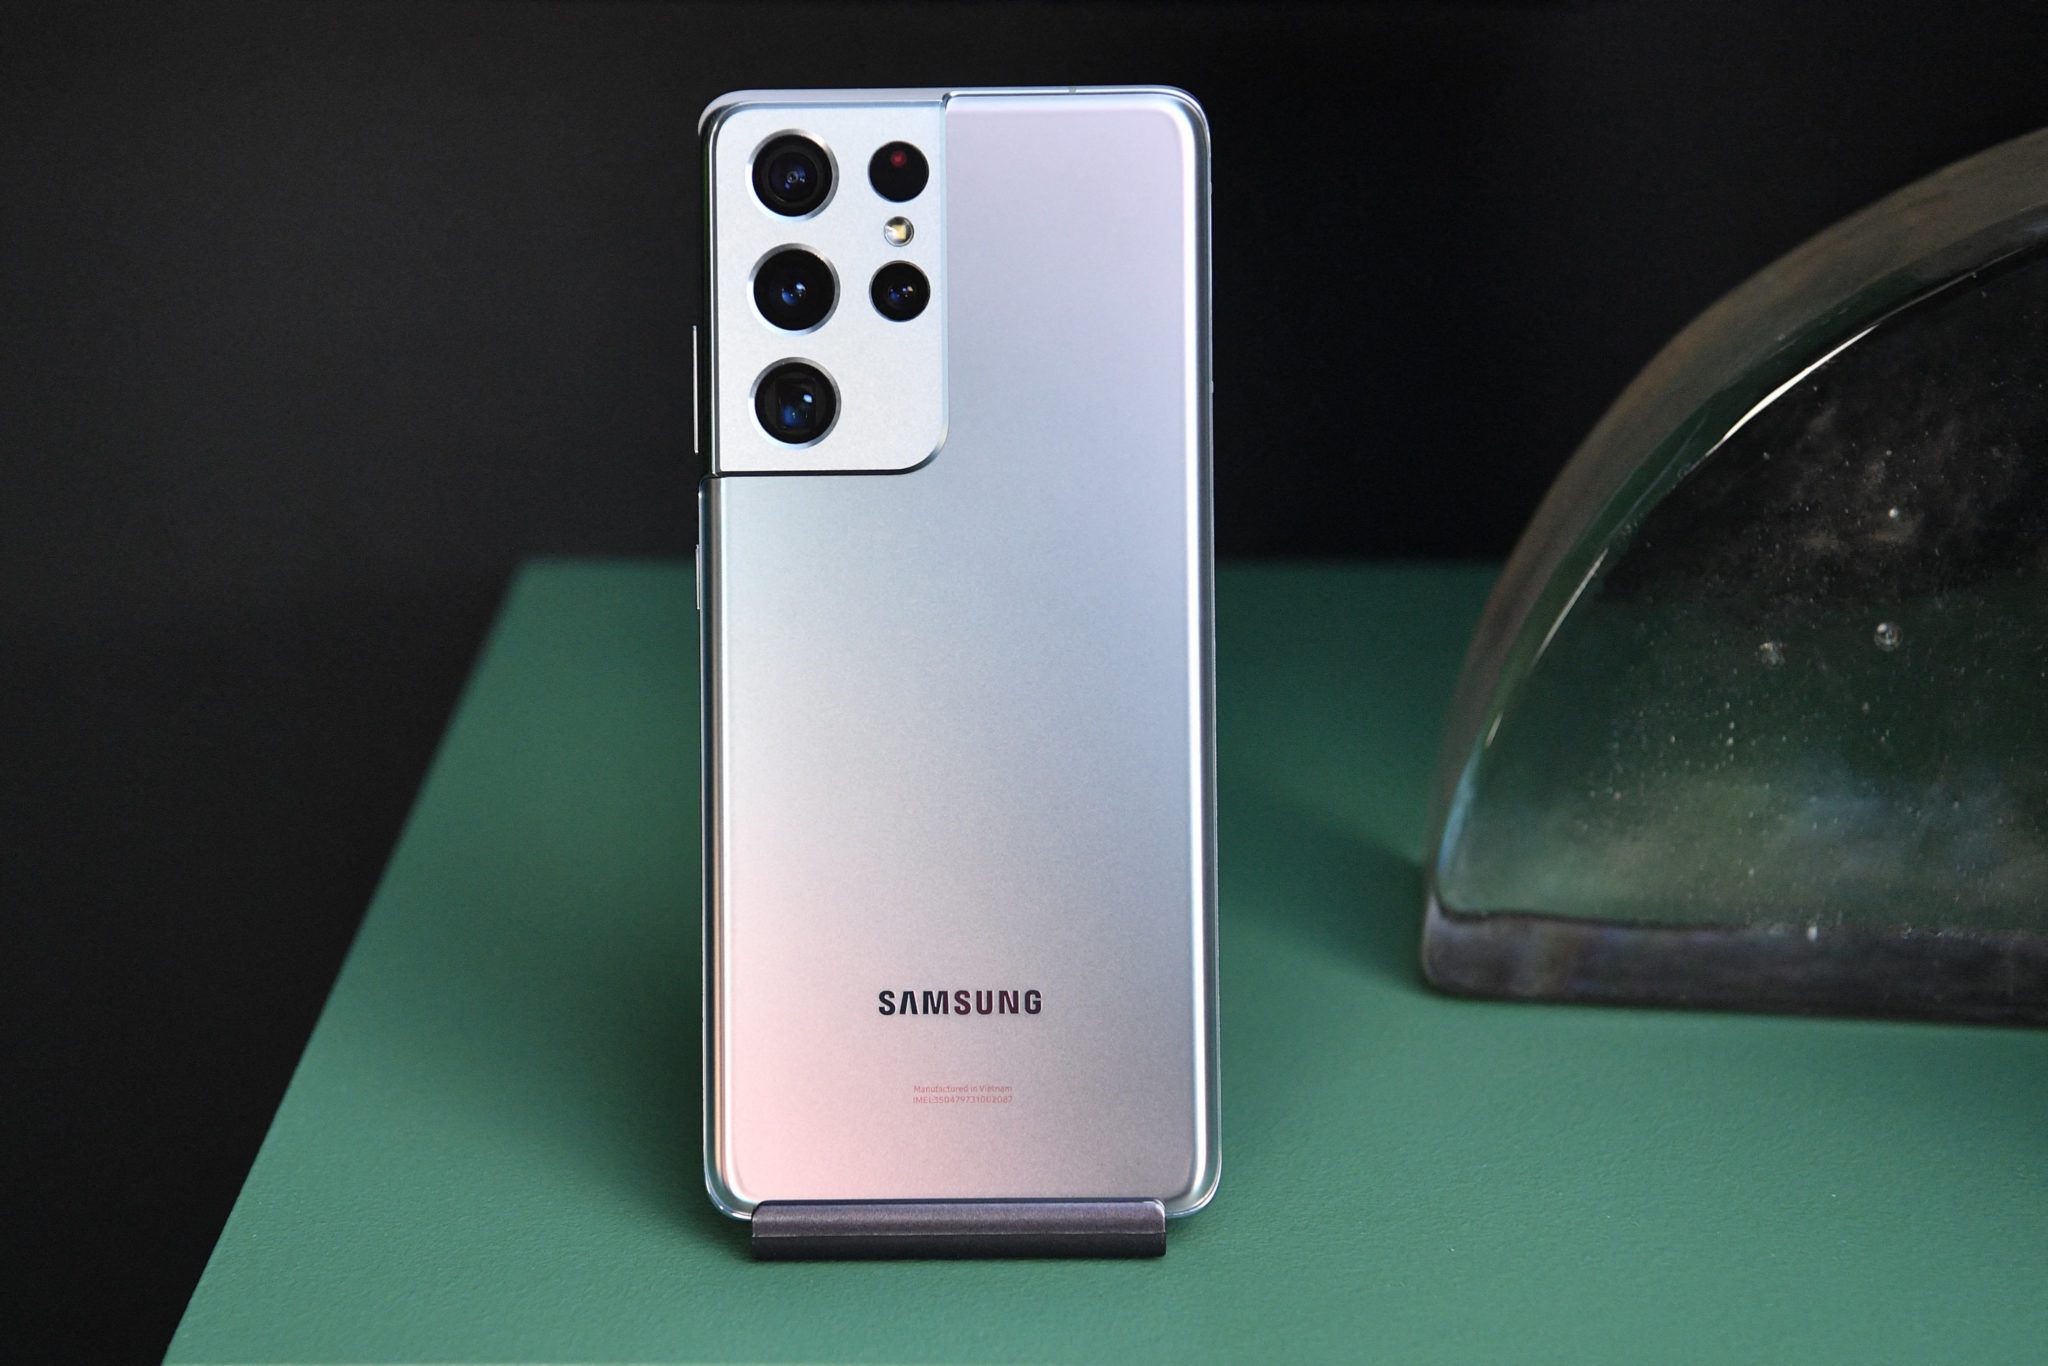 Samsung Galaxy S21 Ultra offiziell vorgestellt: Das Stärkste